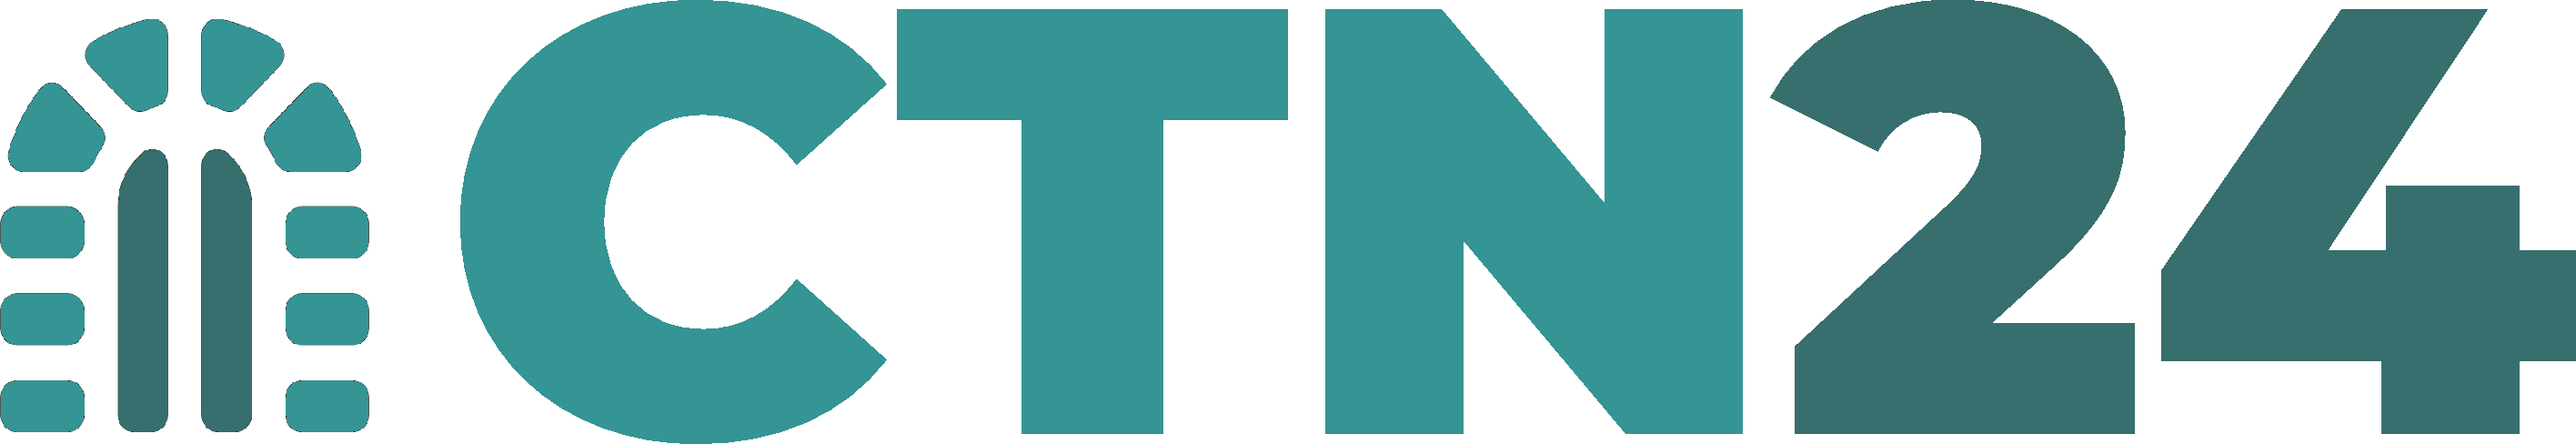 Logo ctn24.pl